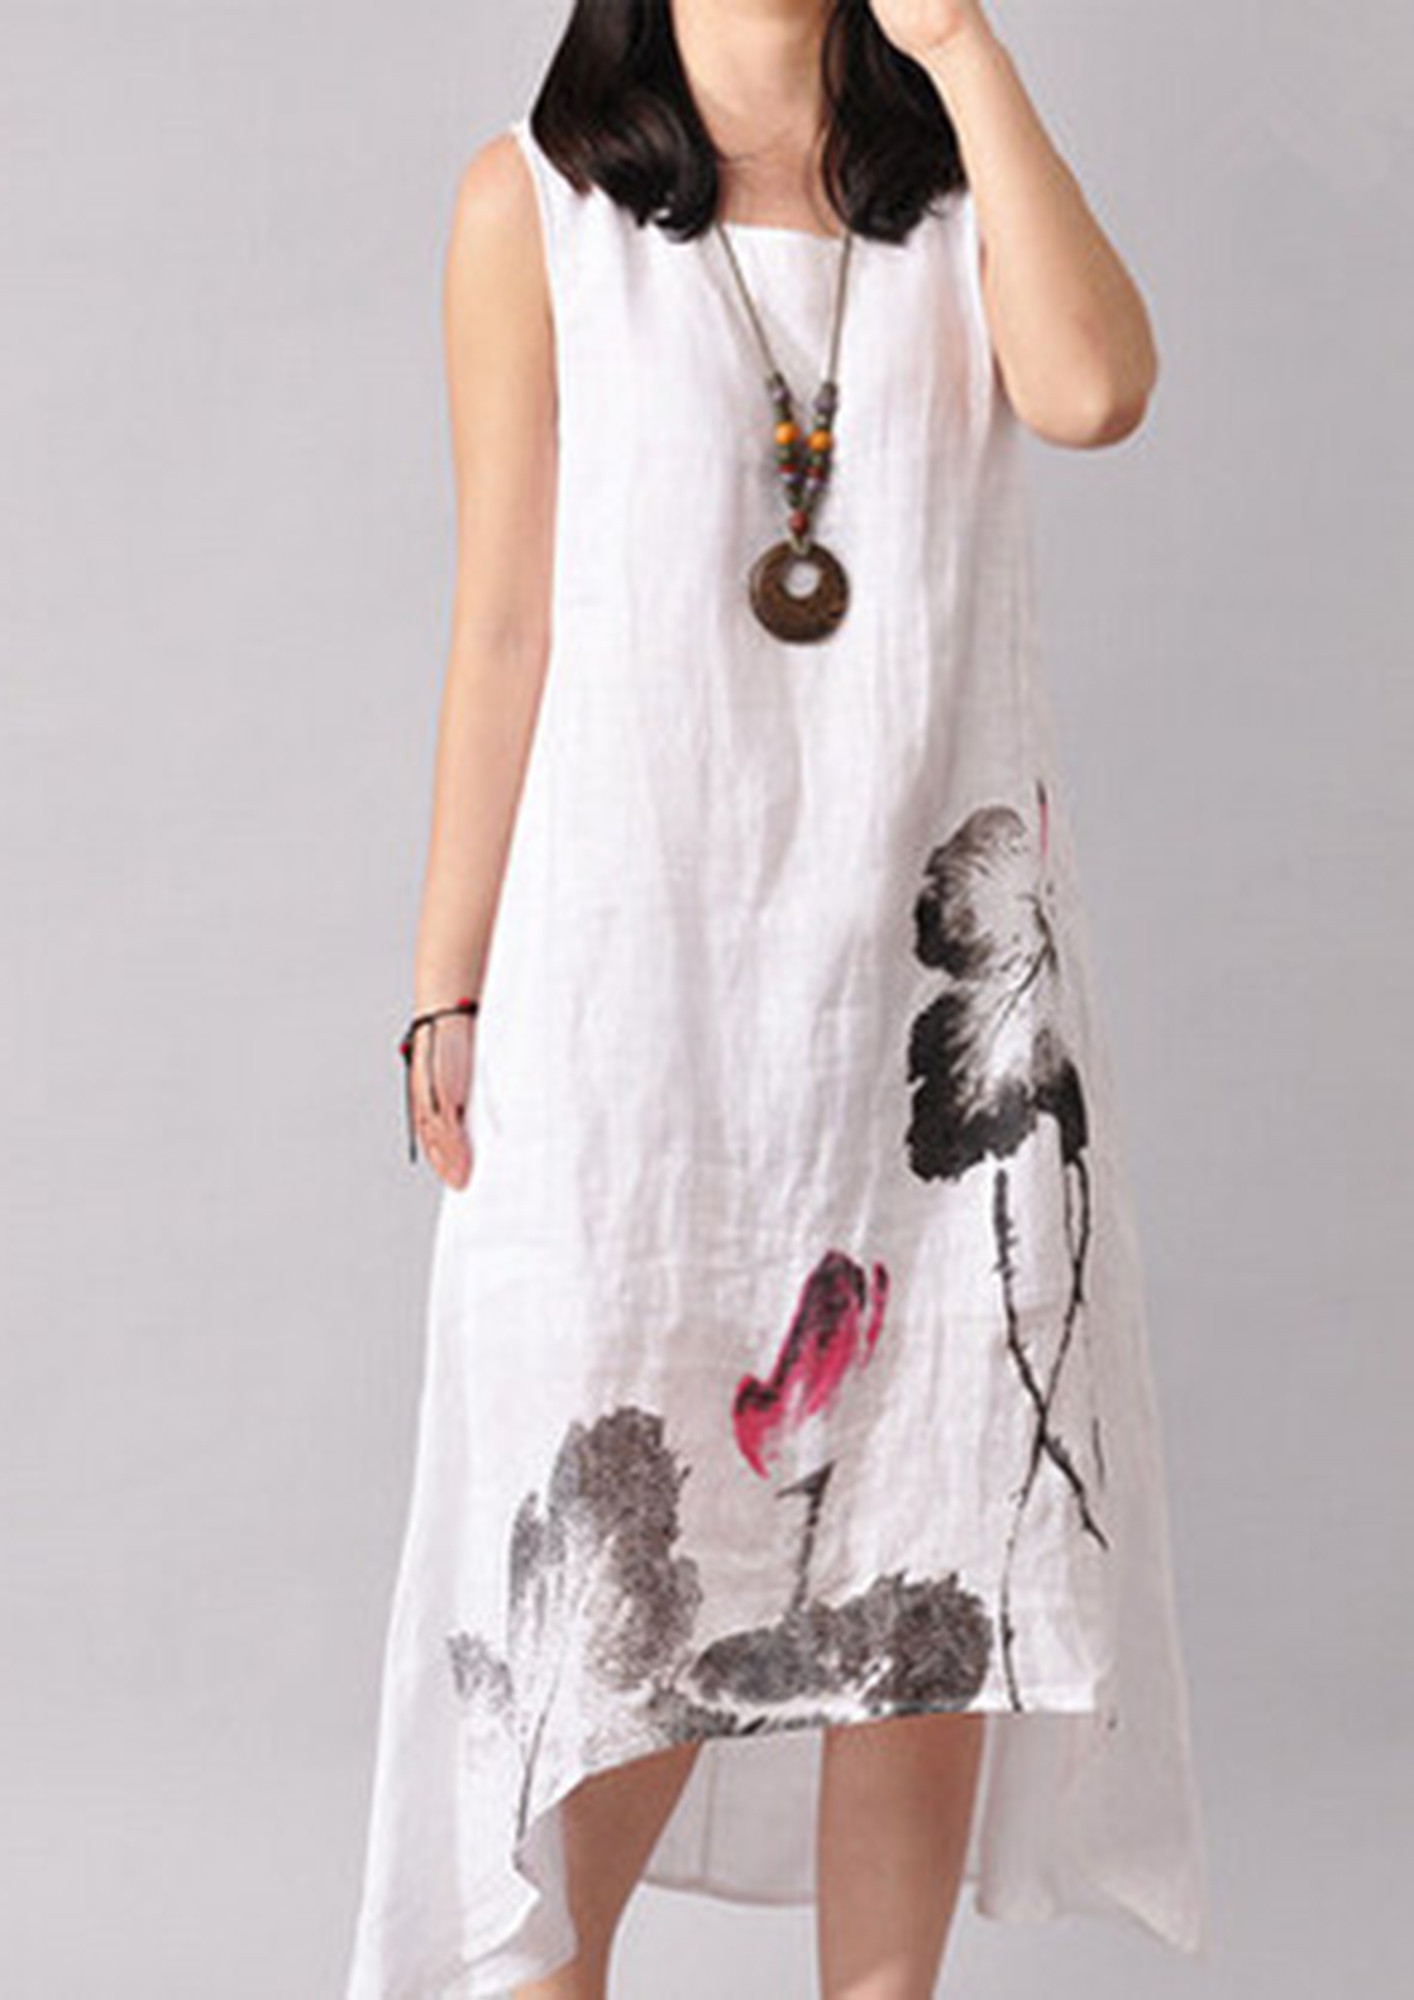 Buy SUVARUU Cotton Linen Dress for Women, Women Dresses (X-Large, Light  Sage) at Amazon.in